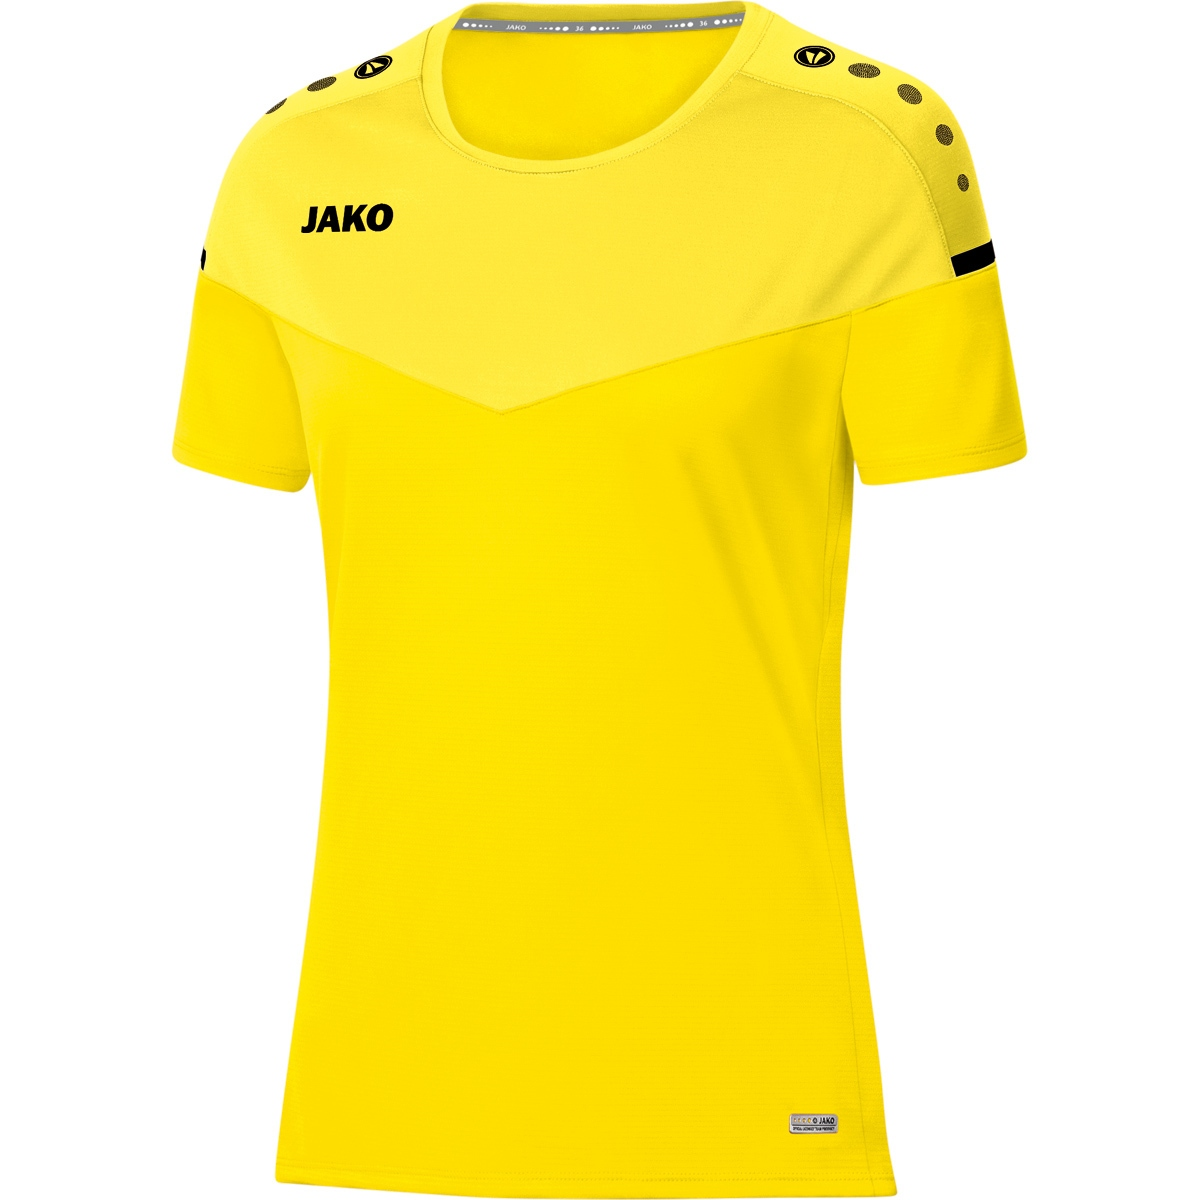 Damen, JAKO 6120 2.0 light, citro/citro 36, Gr. Champ T-Shirt